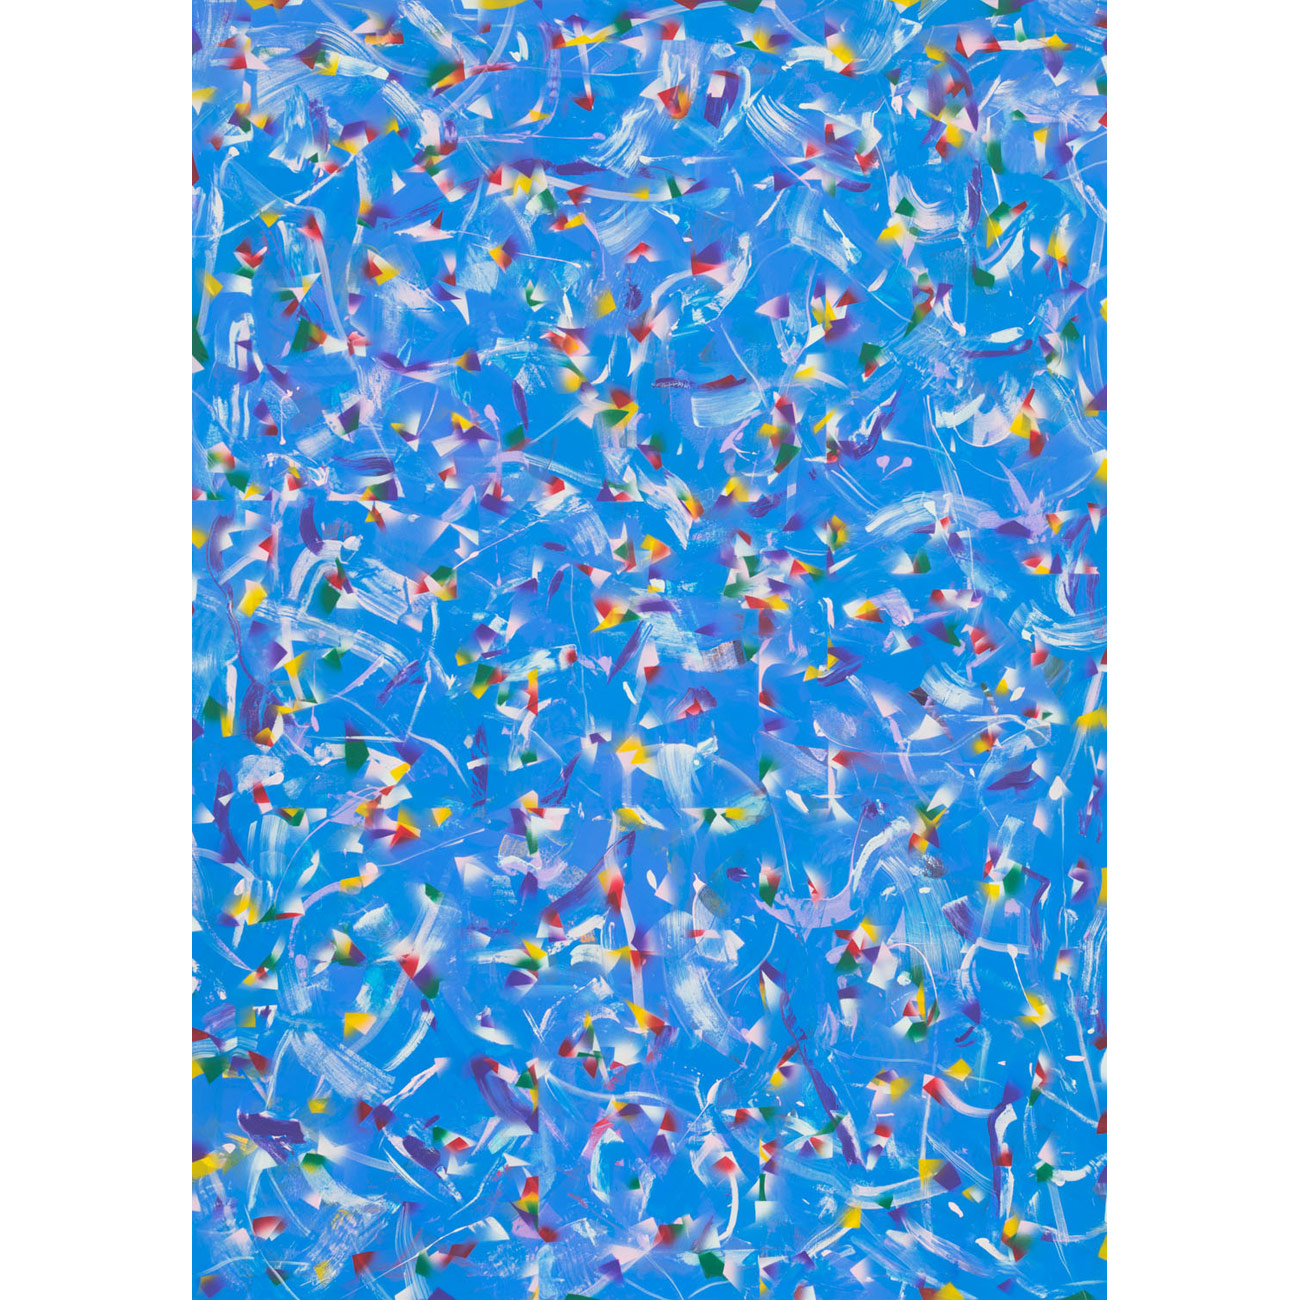 Mondlicht . 2017 . 190 x 135 cm . Acrylic on canvas